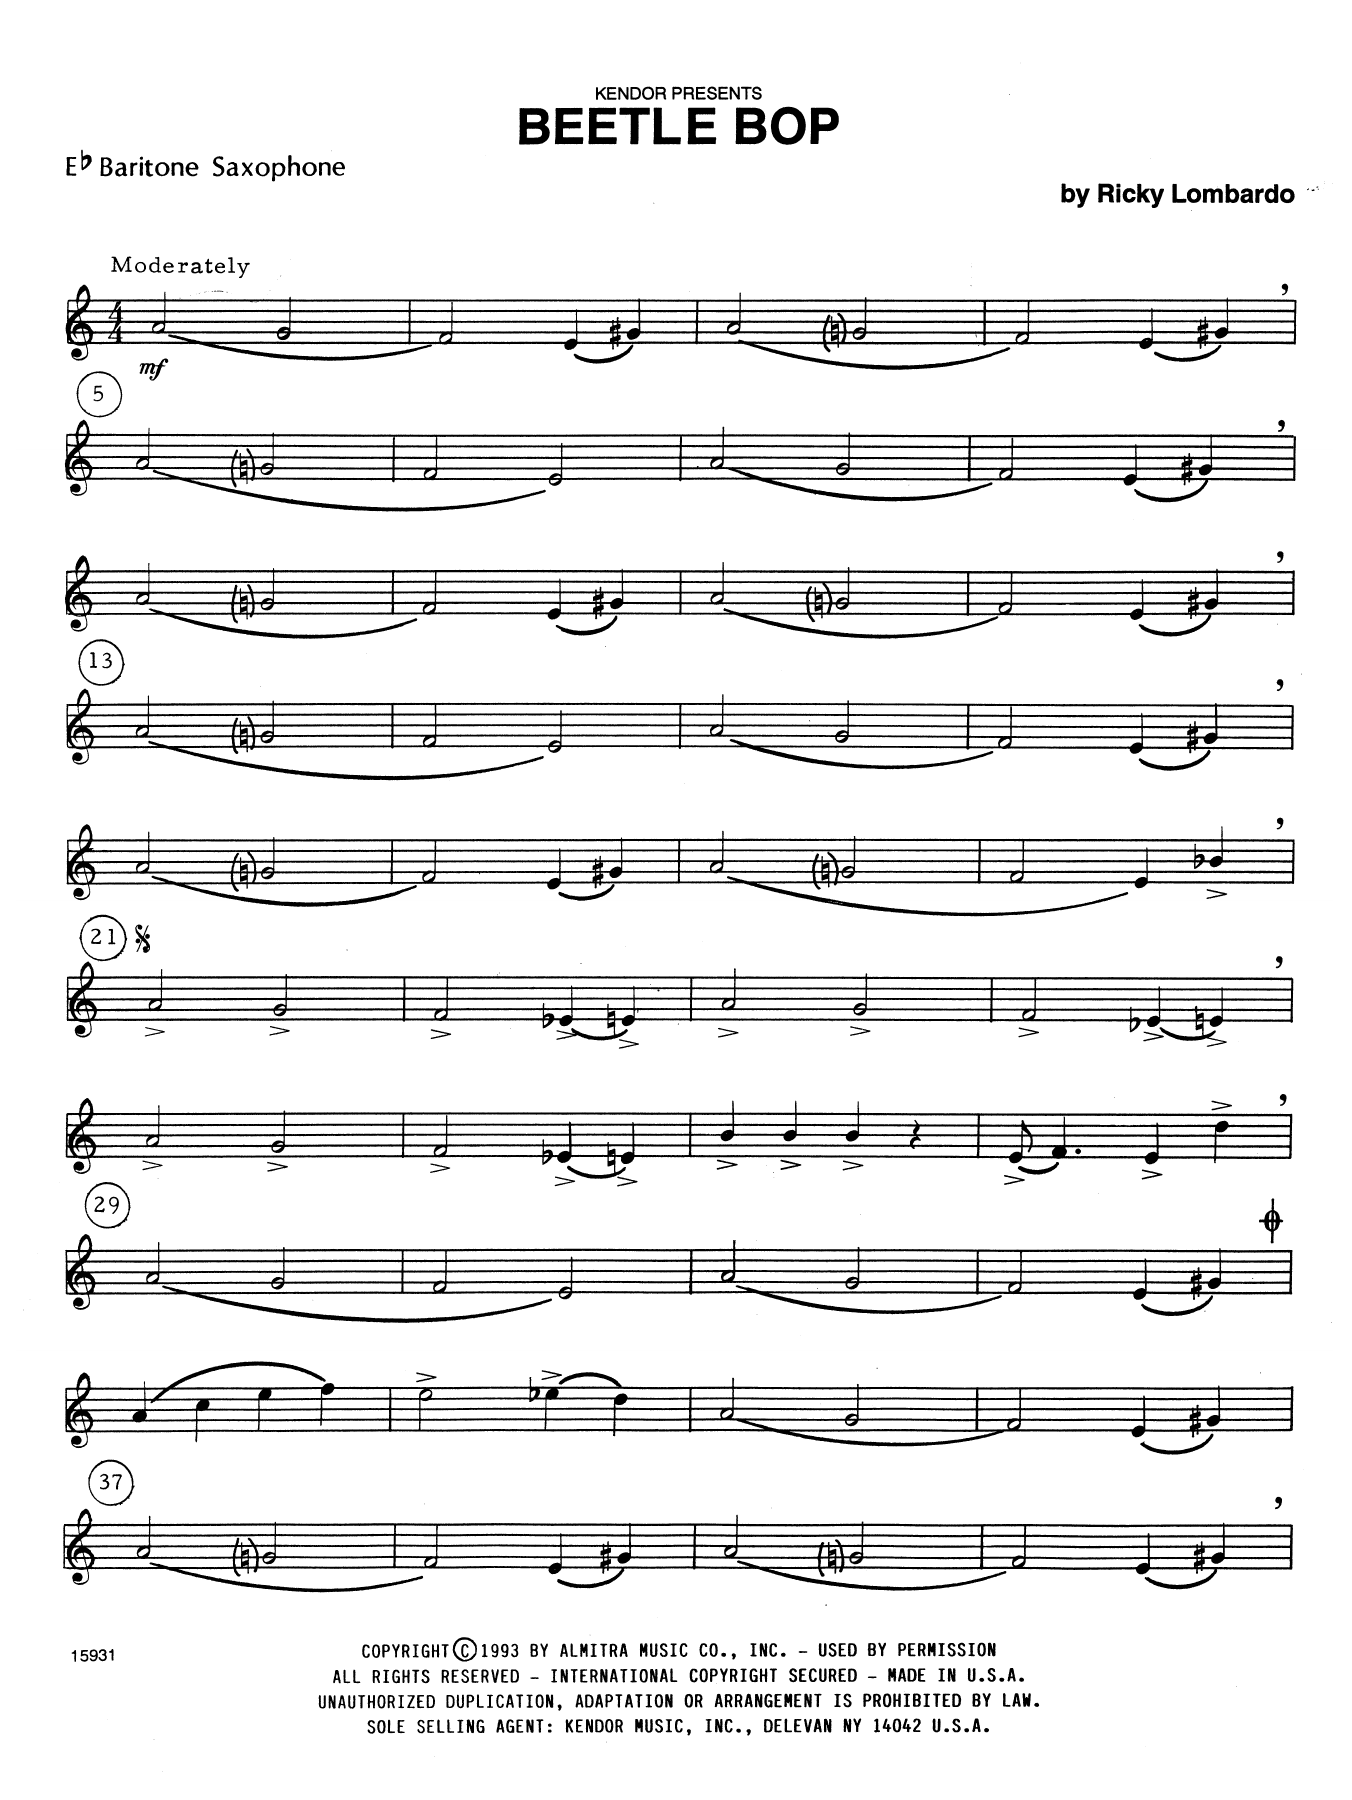 Download Ricky Lombardo Beetle Bop - Eb Baritone Saxophone Sheet Music